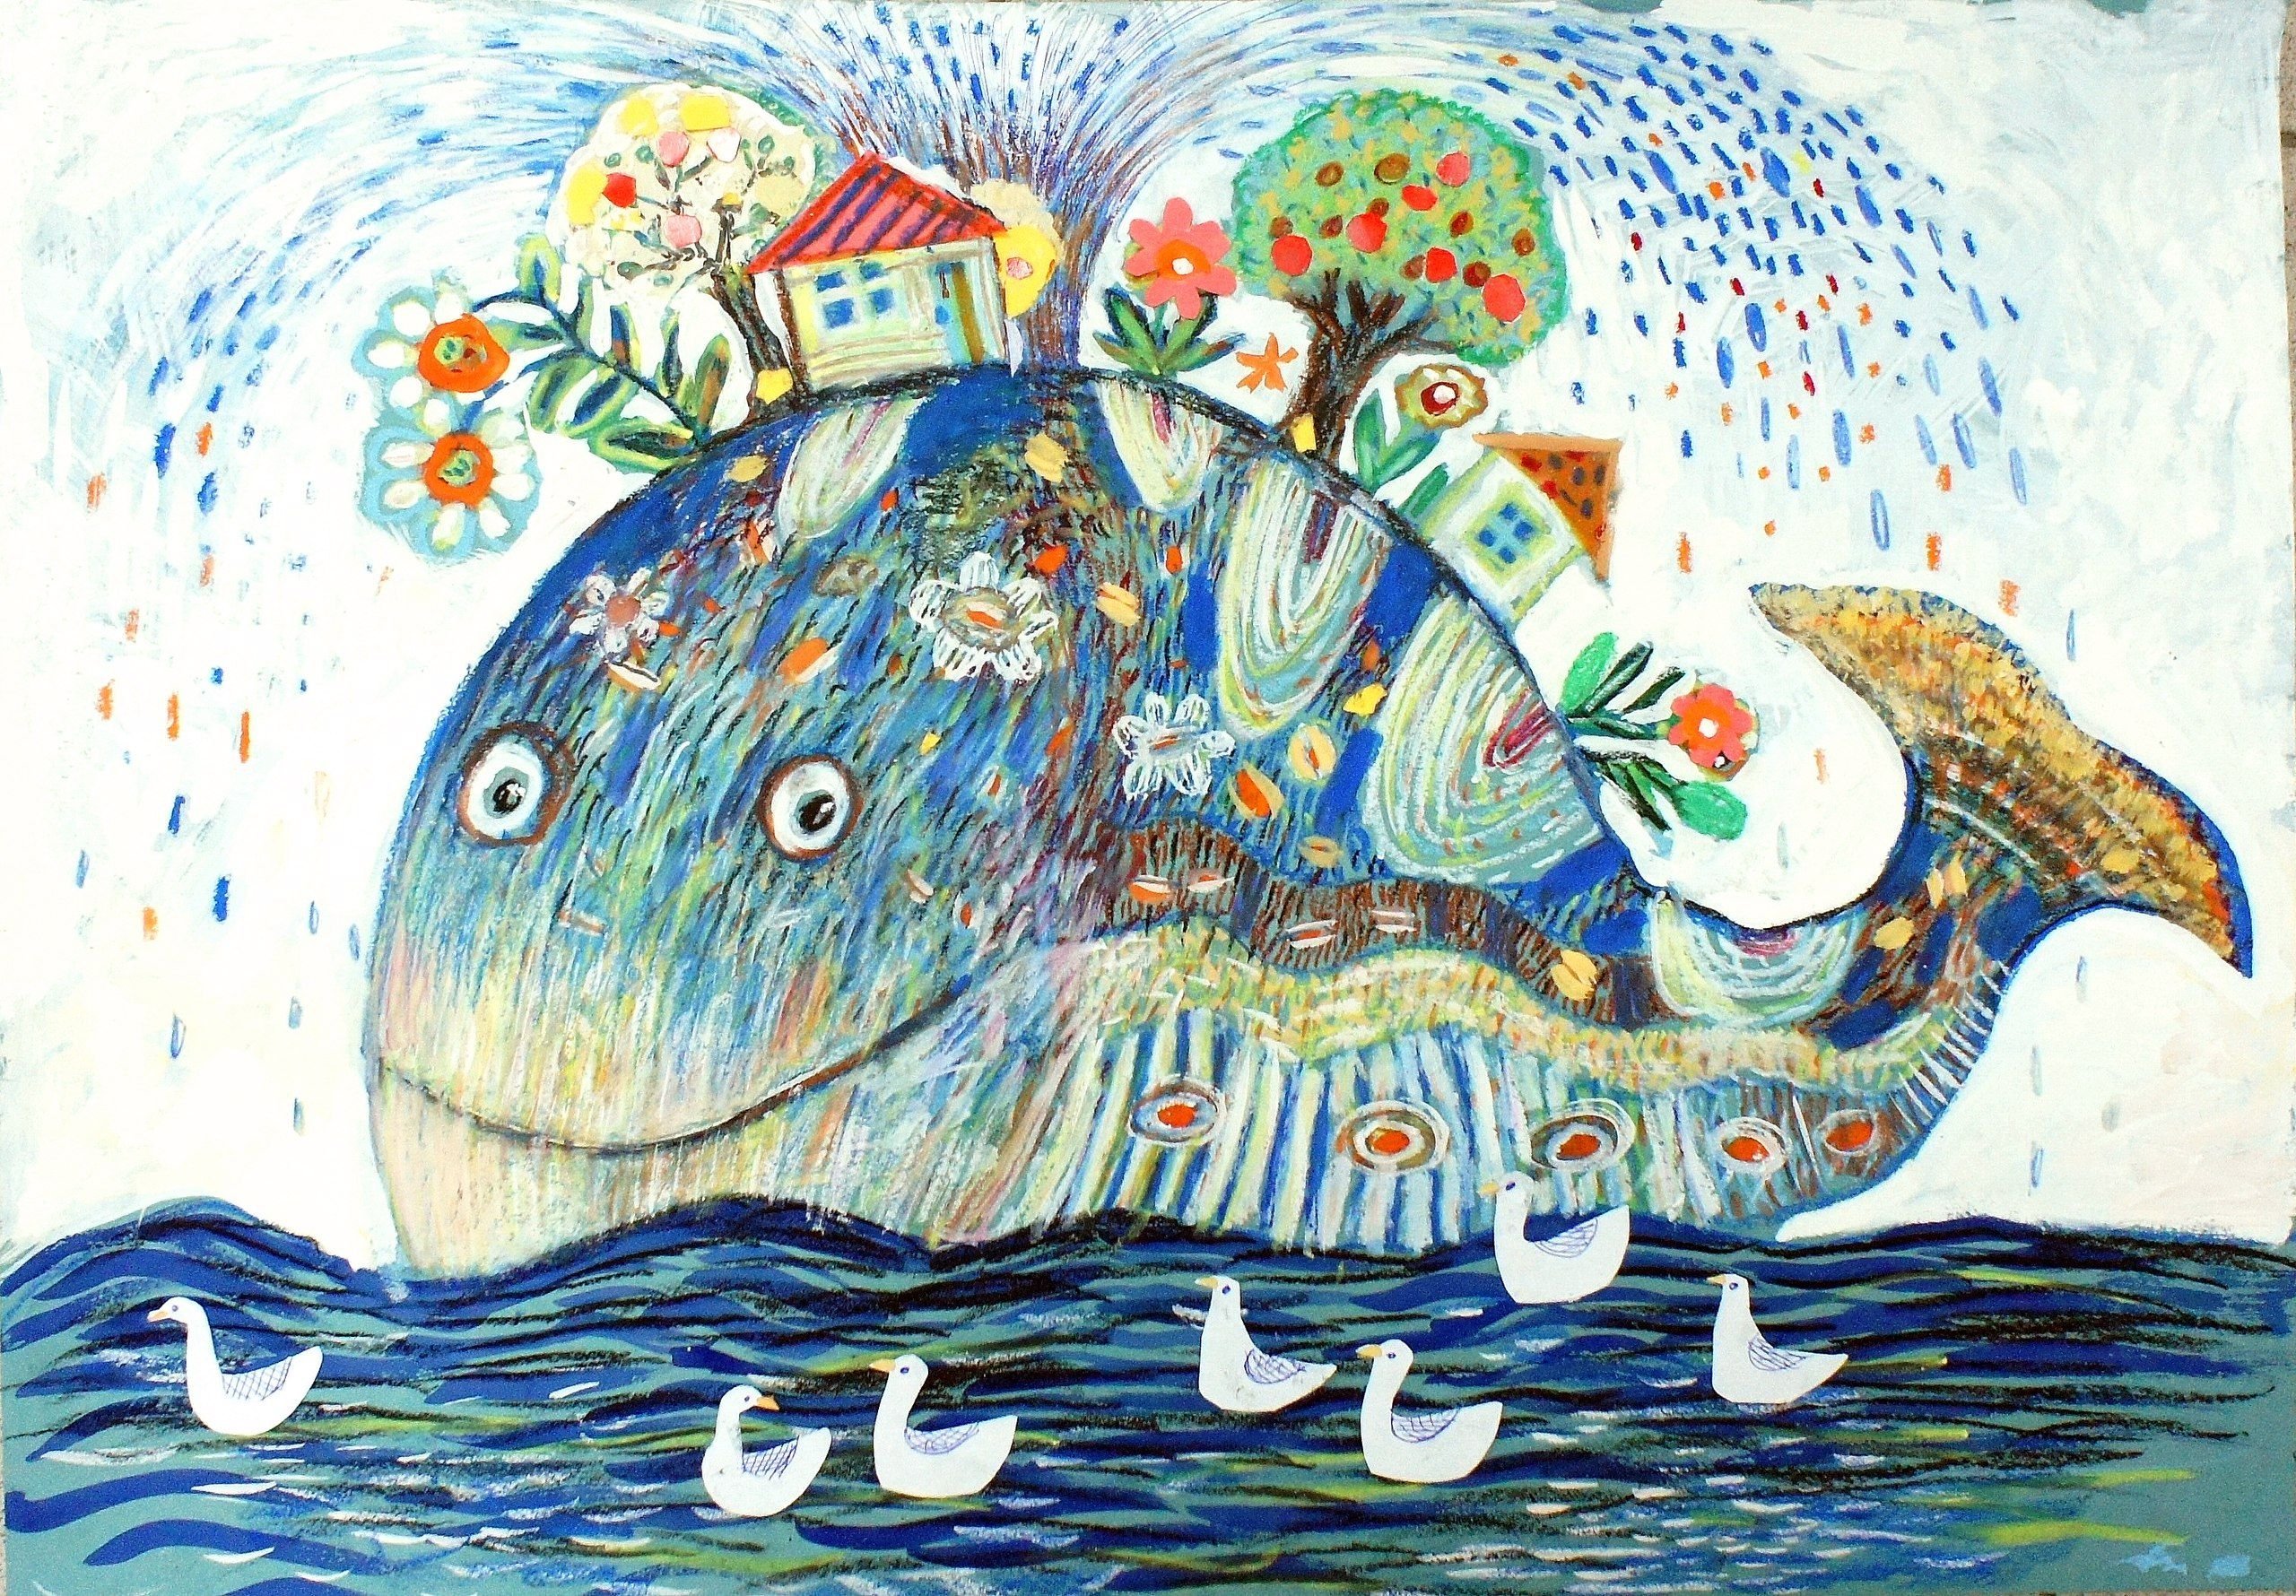 Произведения о чудесах и фантазии 1 класс. Чудо юдо рыба кит. Чудо юдо рыба кит Васнецов. Чудо юдо рыба кит иллюстрации.